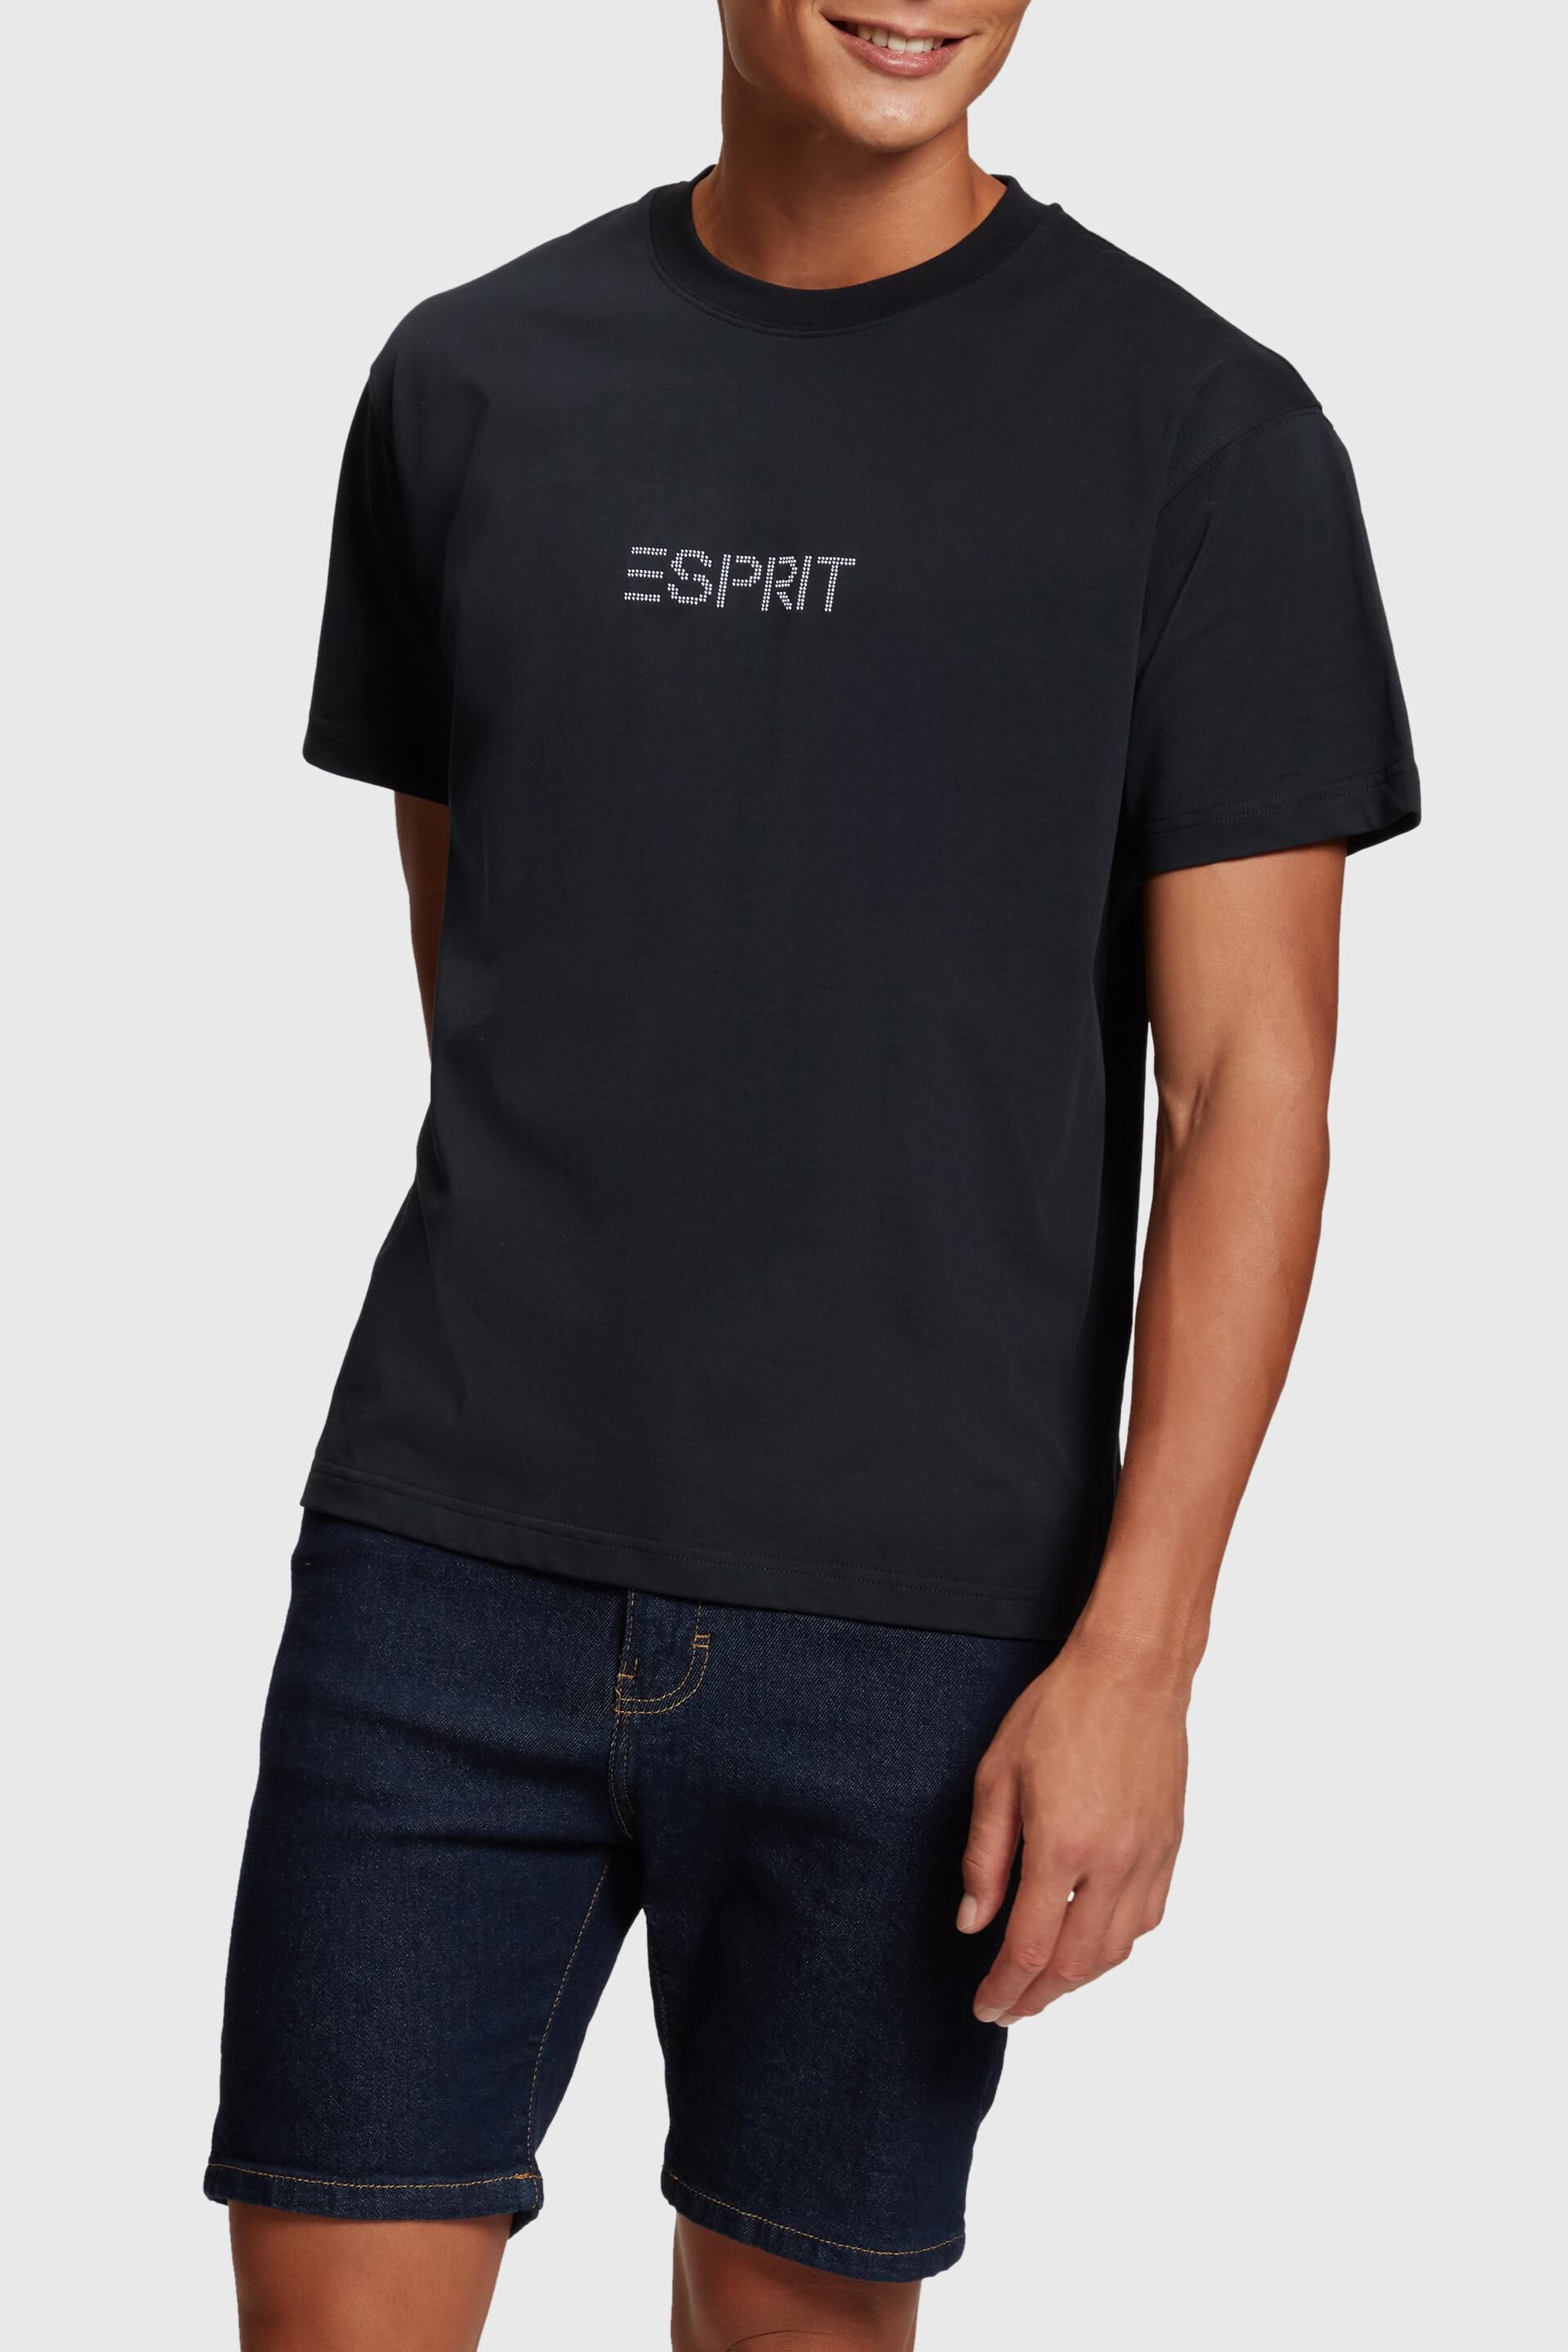 Esprit logo t-shirt Stud applique